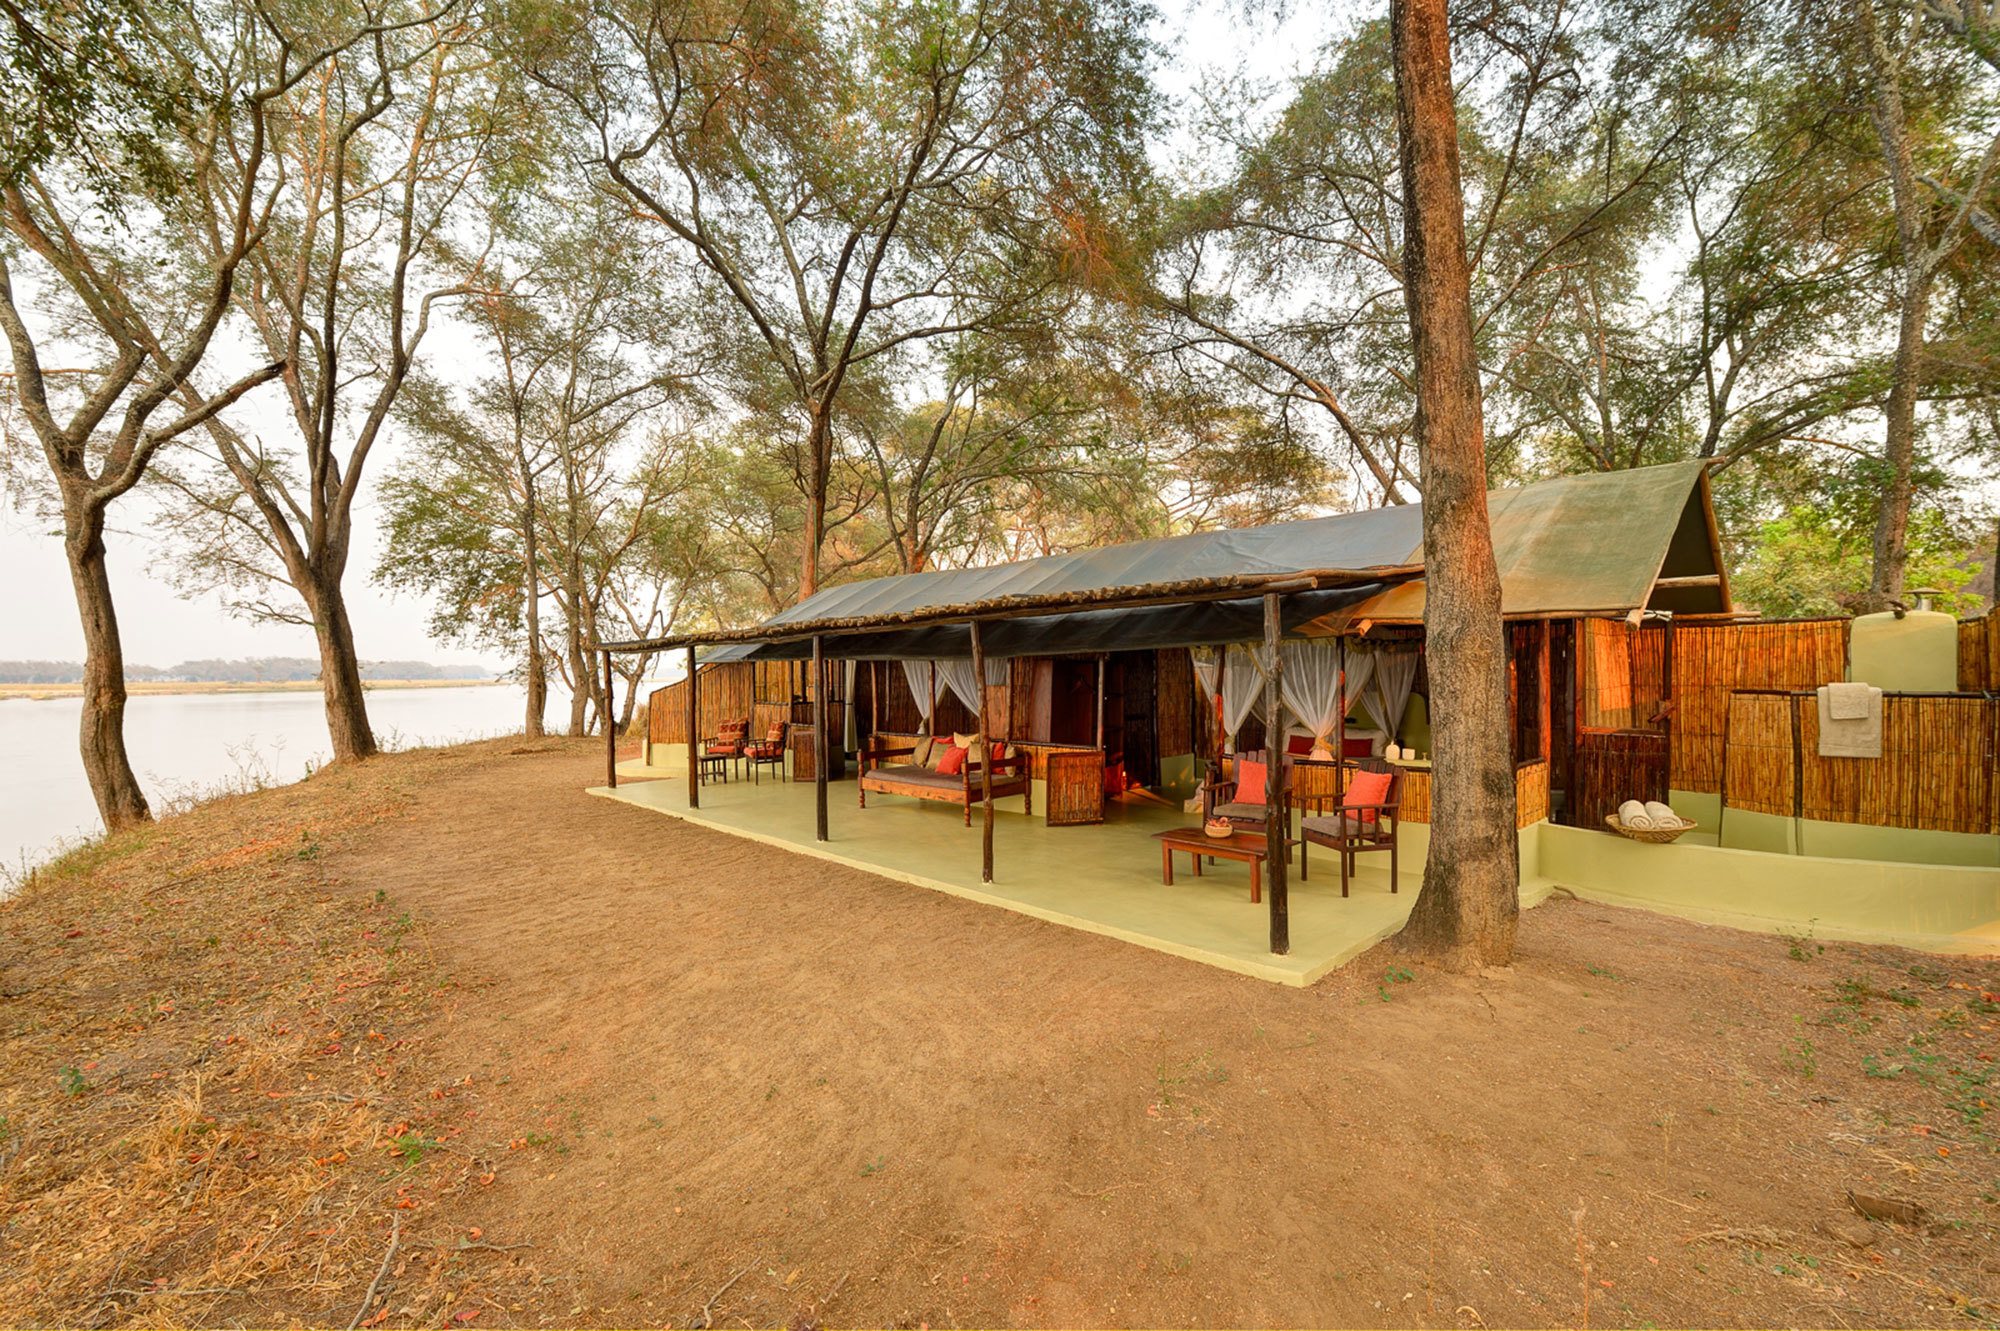 Old Mondoro Bush Camp in Lower Zambezi, Zambia Journeys by Design